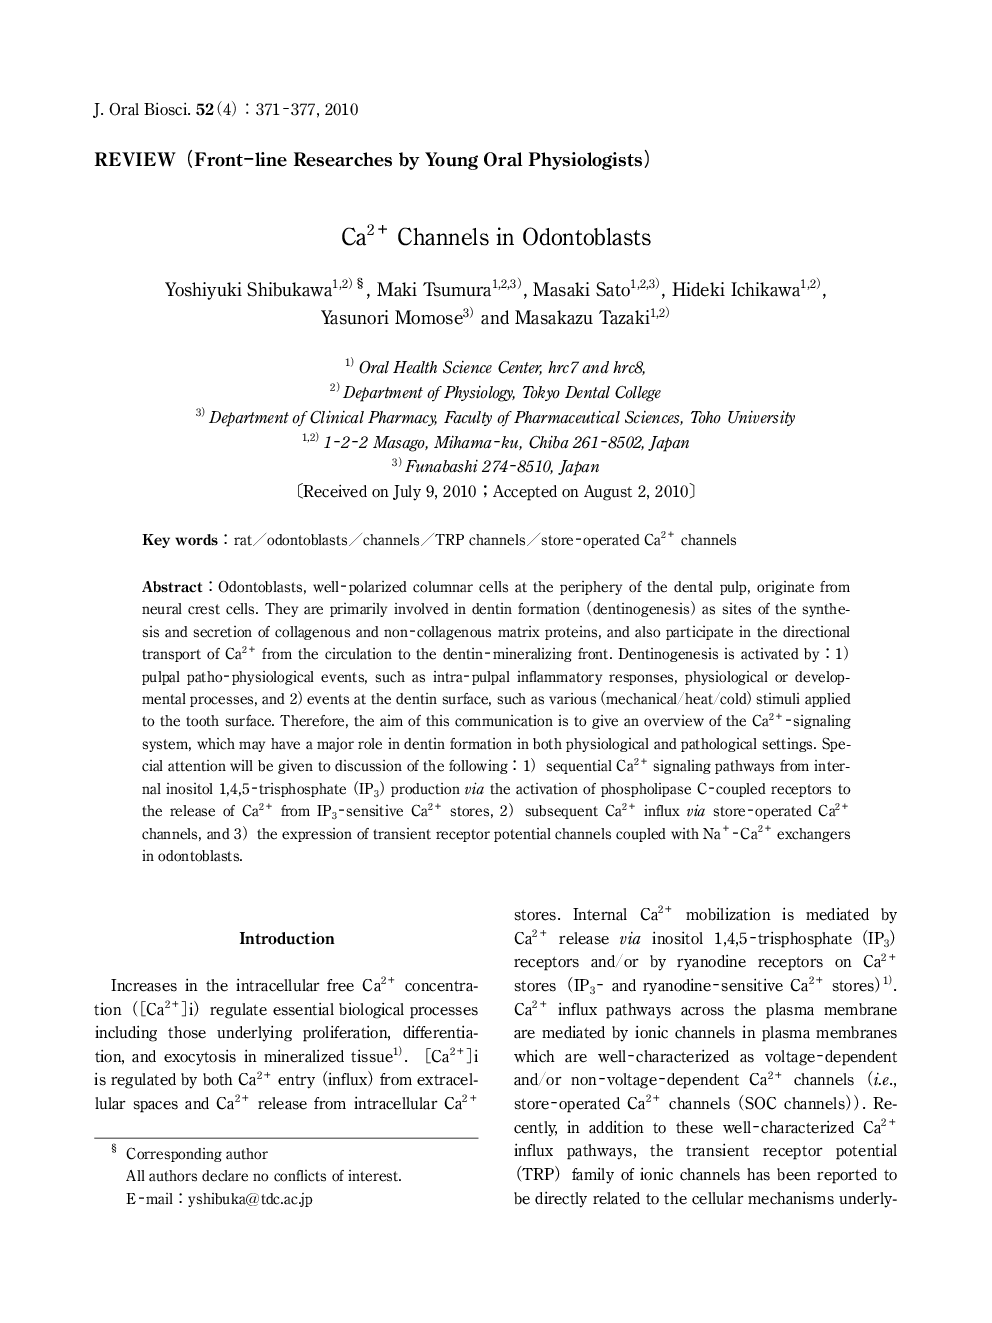 Ca2+ Channels in Odontoblasts